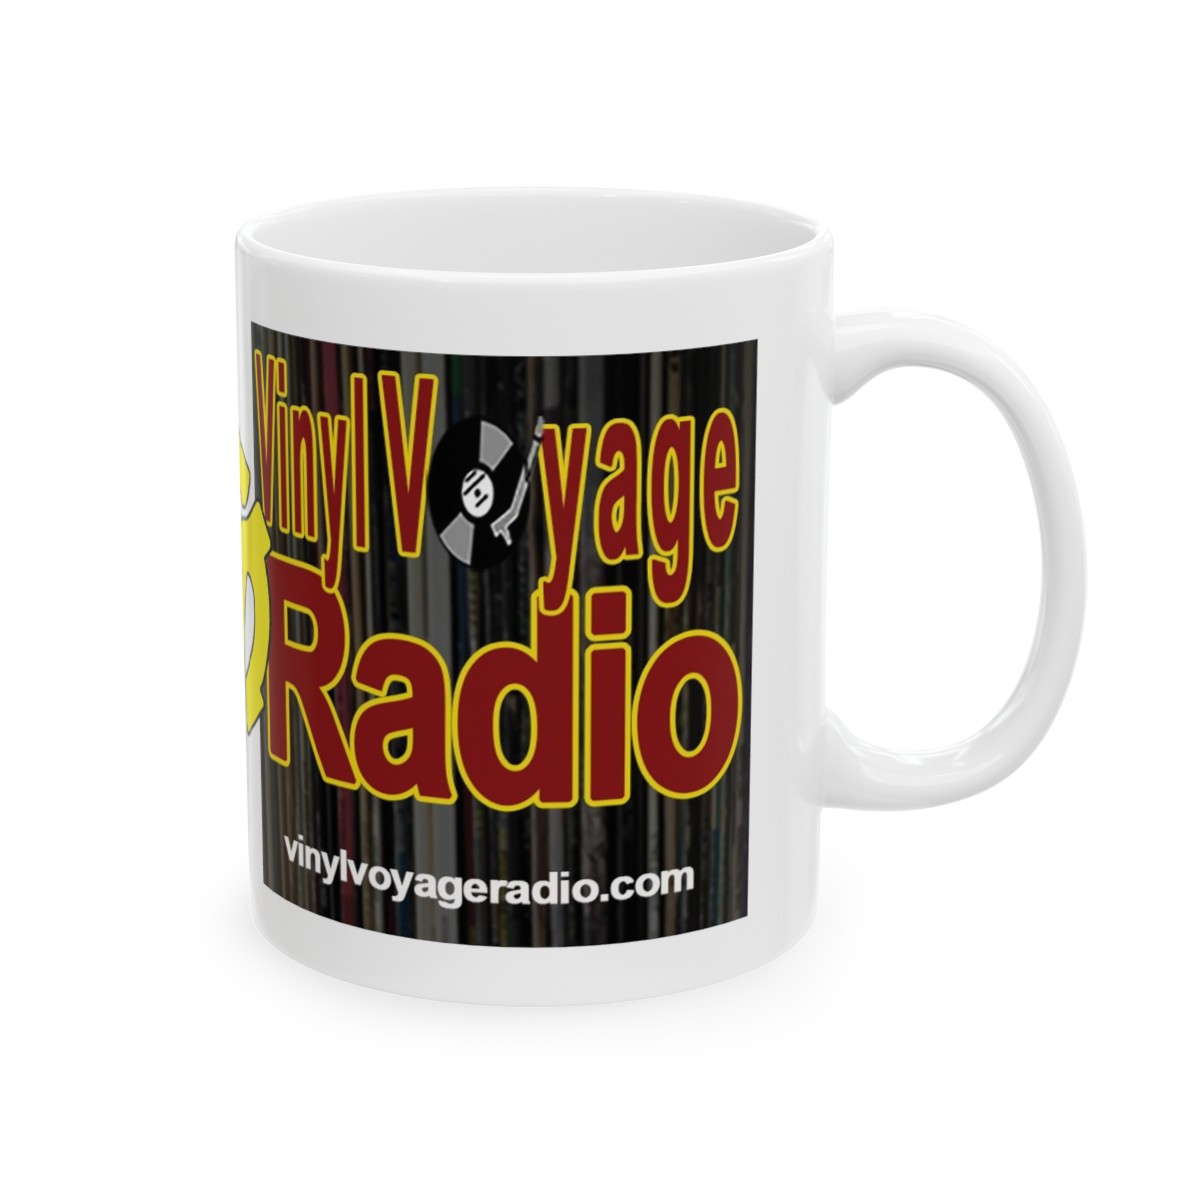 Official Vinyl Voyage Coffee Mug product thumbnail image